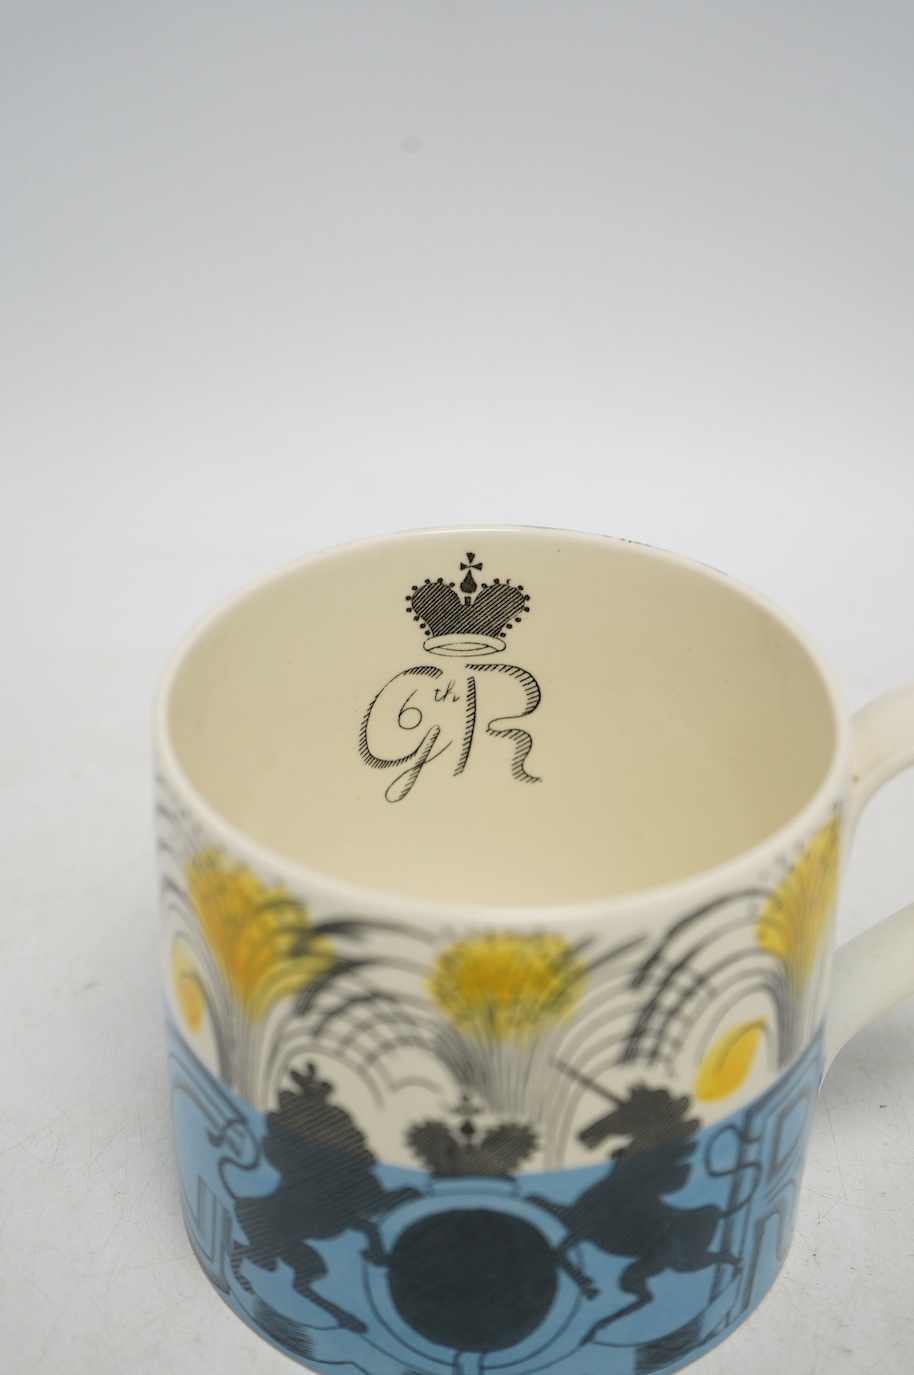 Eric Ravilious for Wedgwood, a commemorative mug, 1937 coronation of George VI, 10cm high. Condition - good